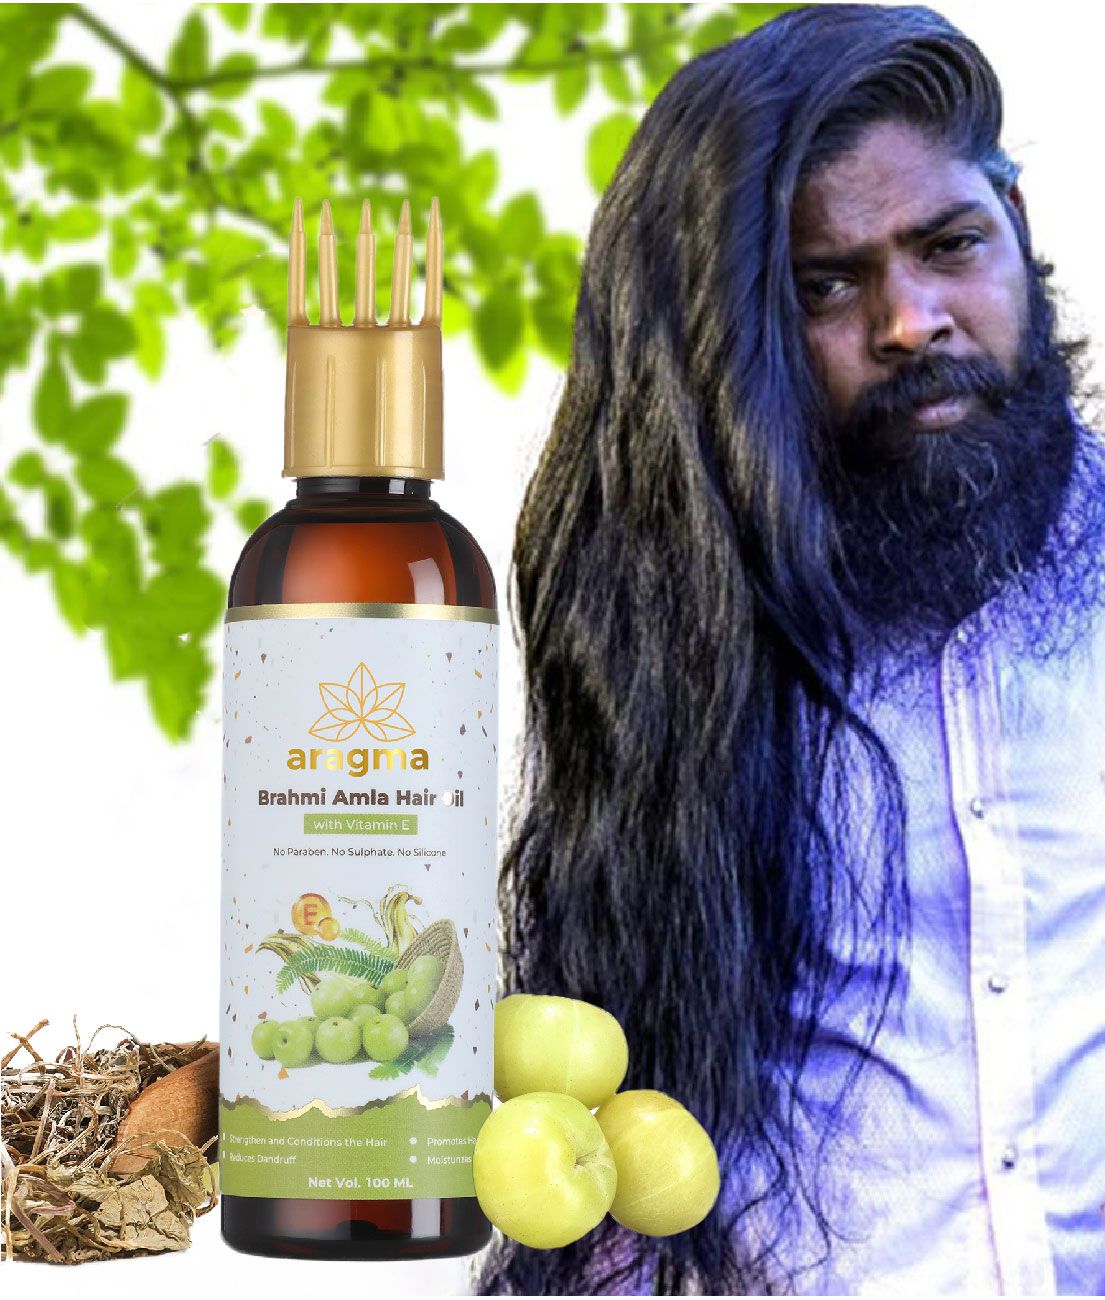 Aragma Brahmi Amla Hair Growth Oil with Vitamin E - Herbal product, 100 ml